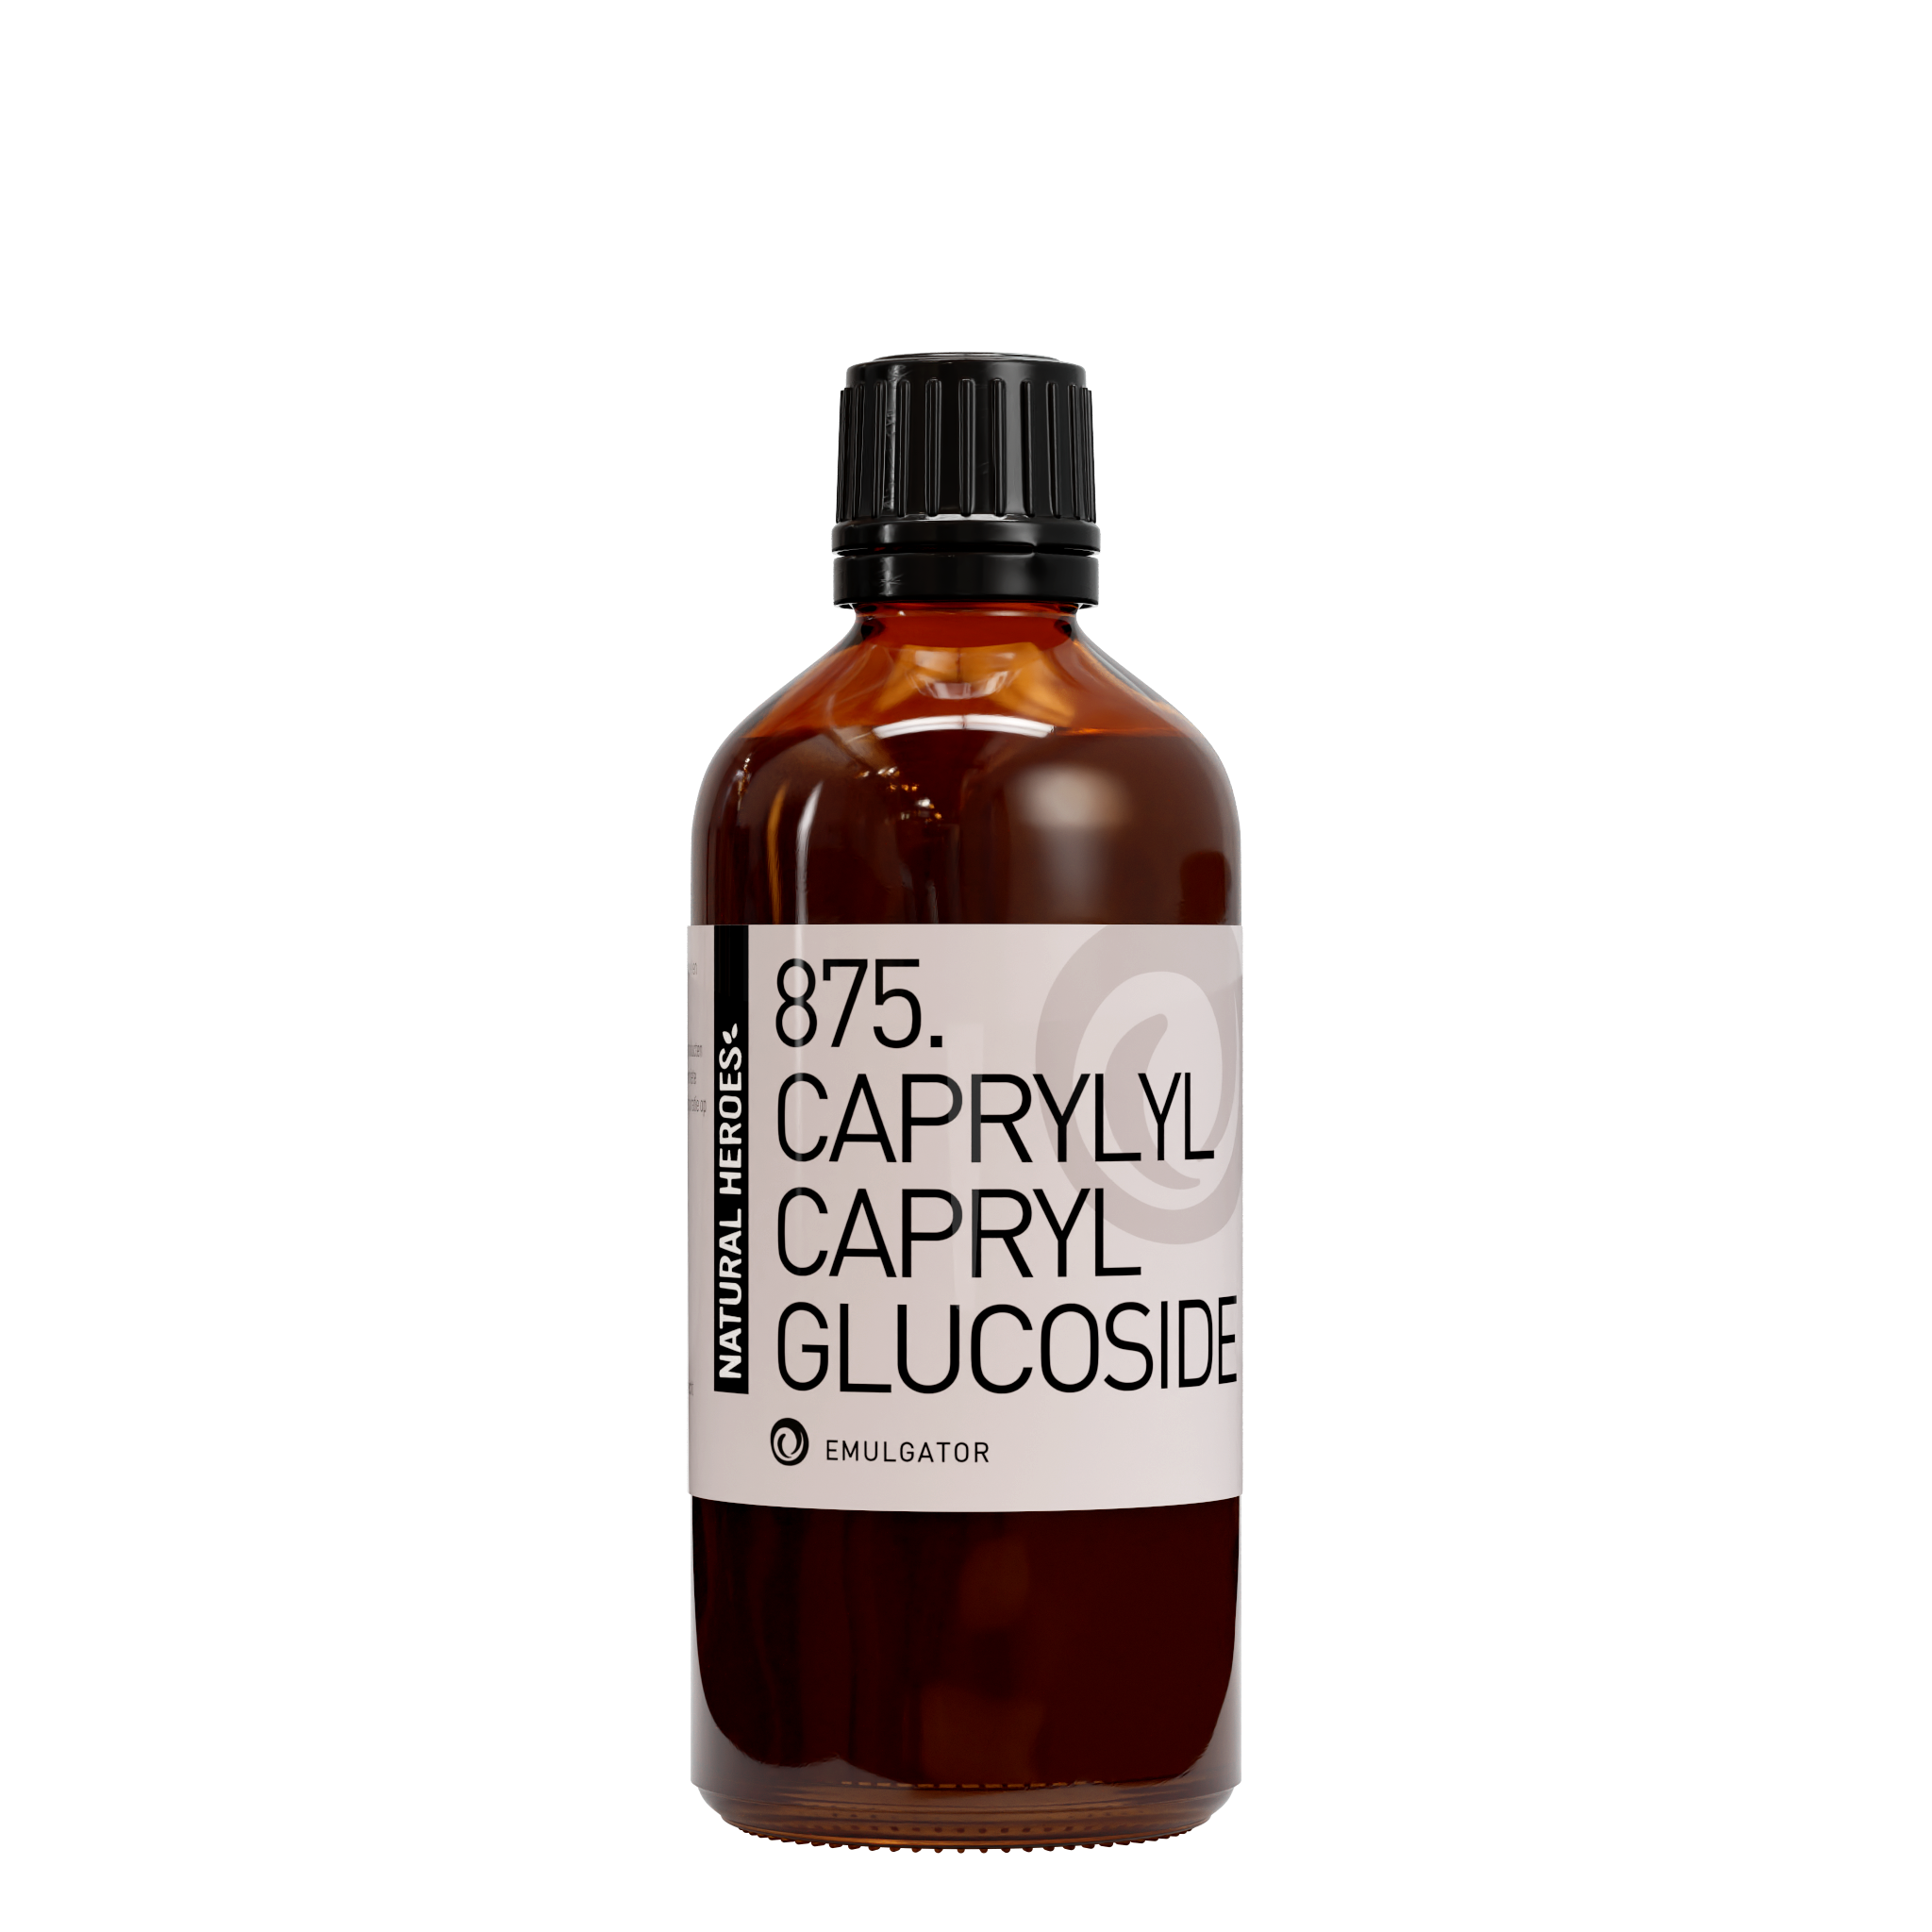 Image of Caprylyl Capryl Glucoside - Vloeibaar Surfactant (Kleine bubbels) 100 ml